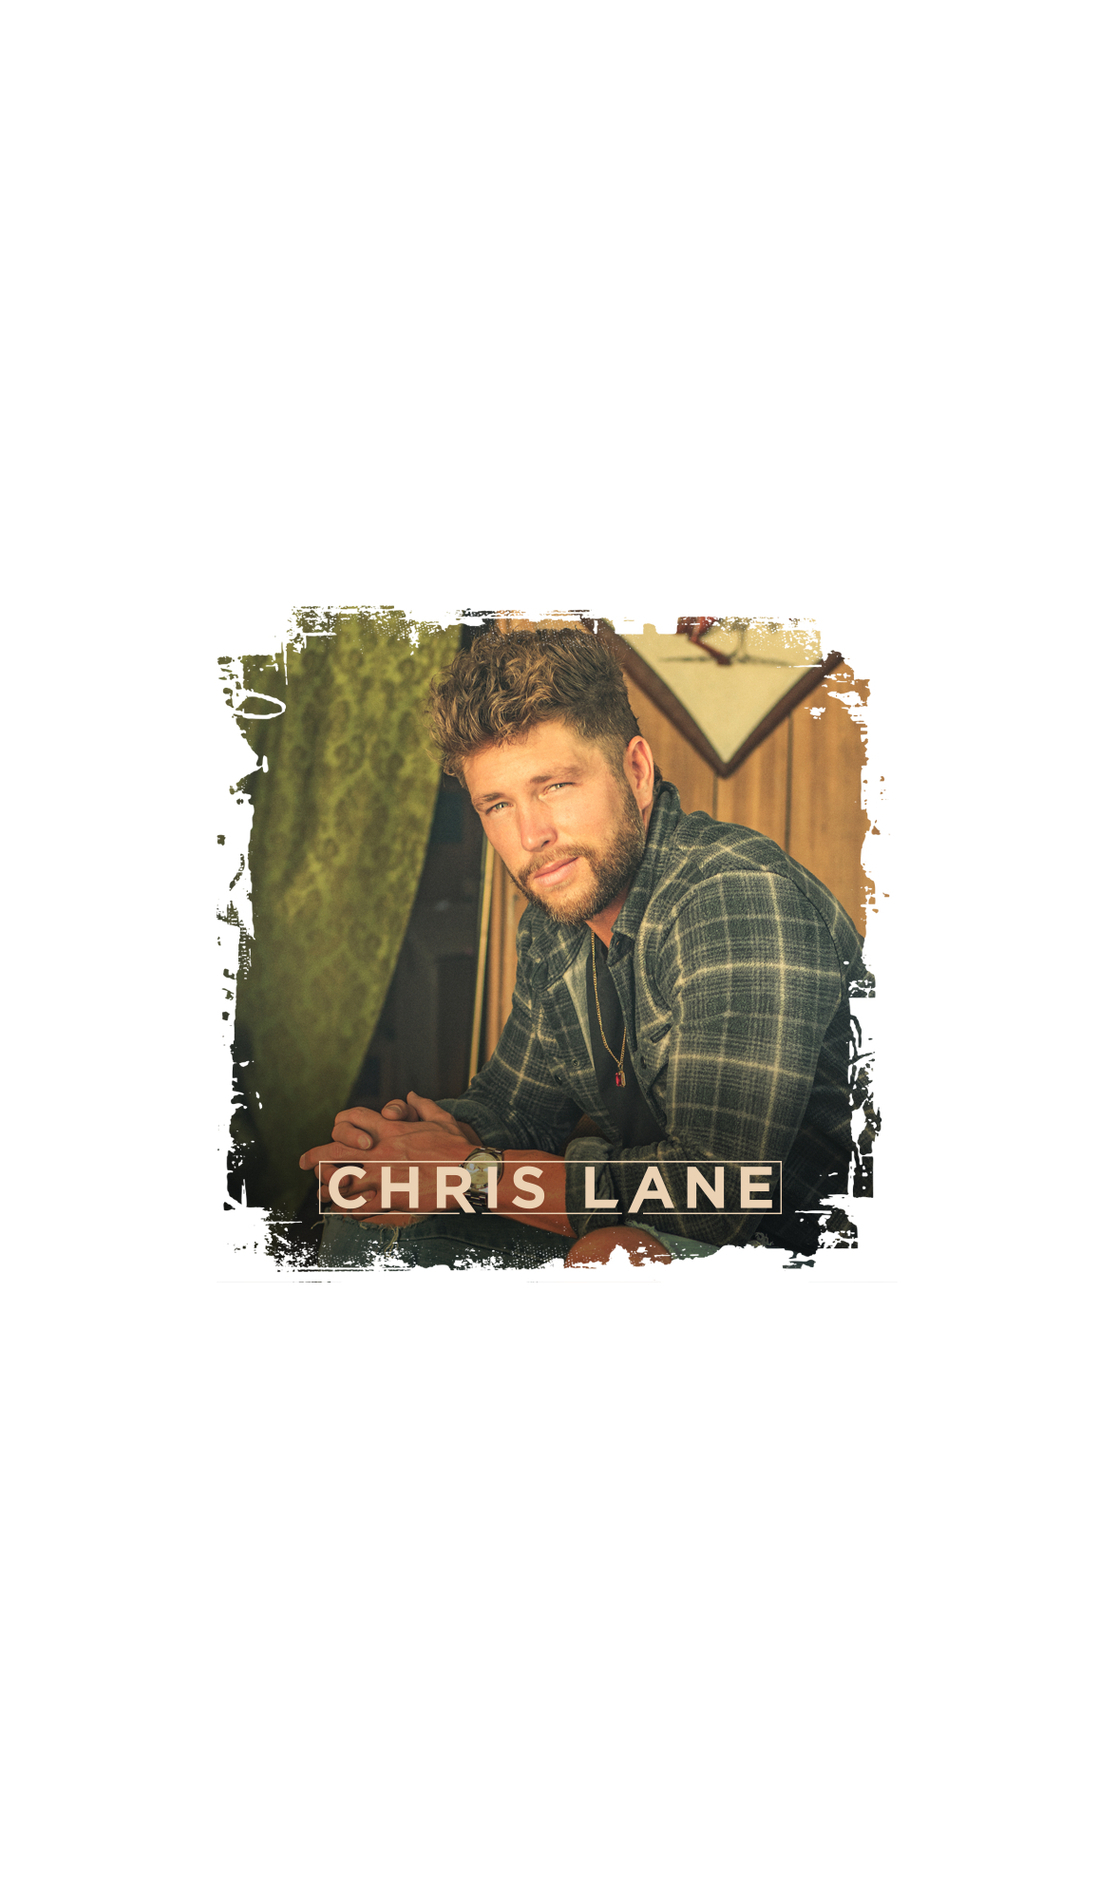 A Chris Lane live event